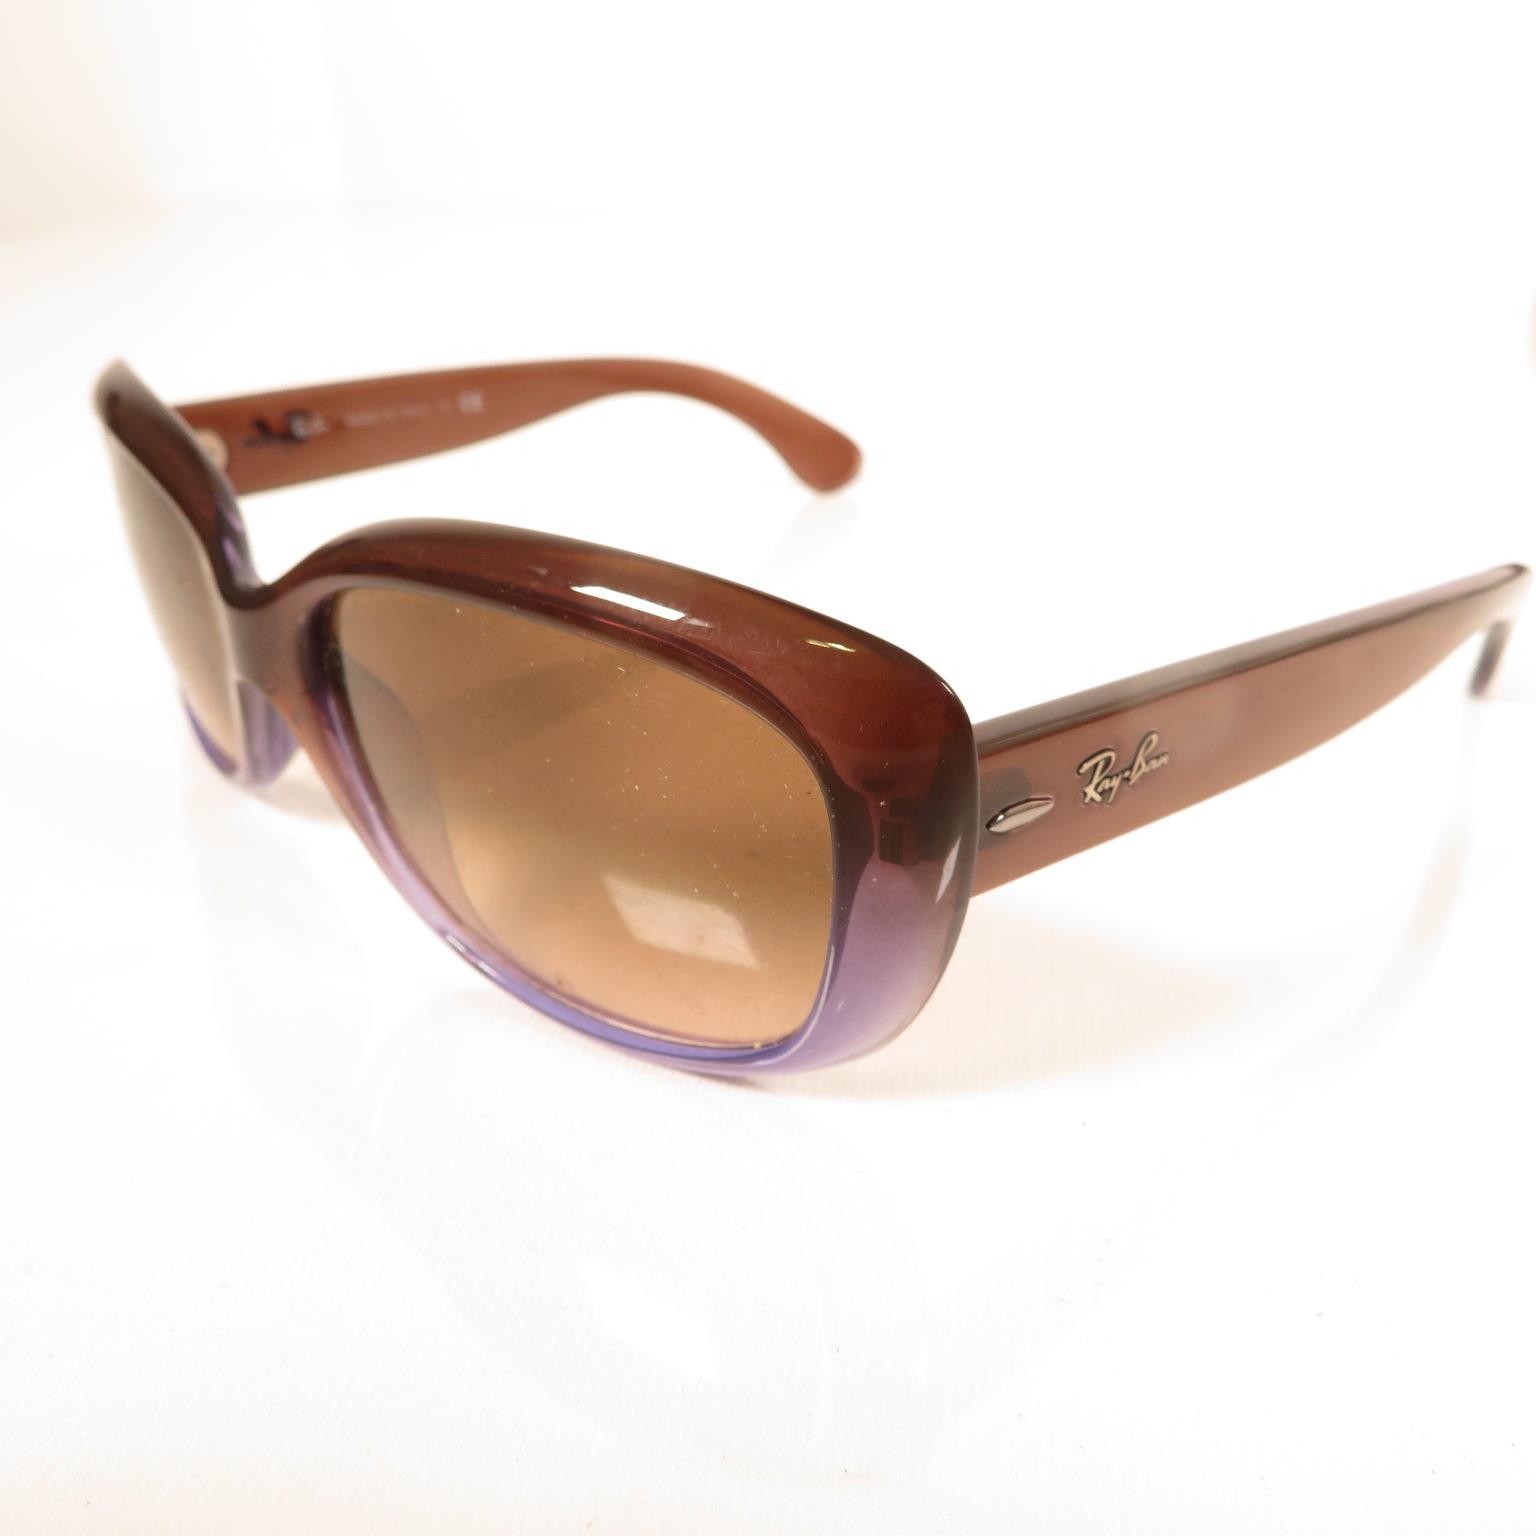 6x pairs Ray Ban sunglasses - - Image 4 of 31